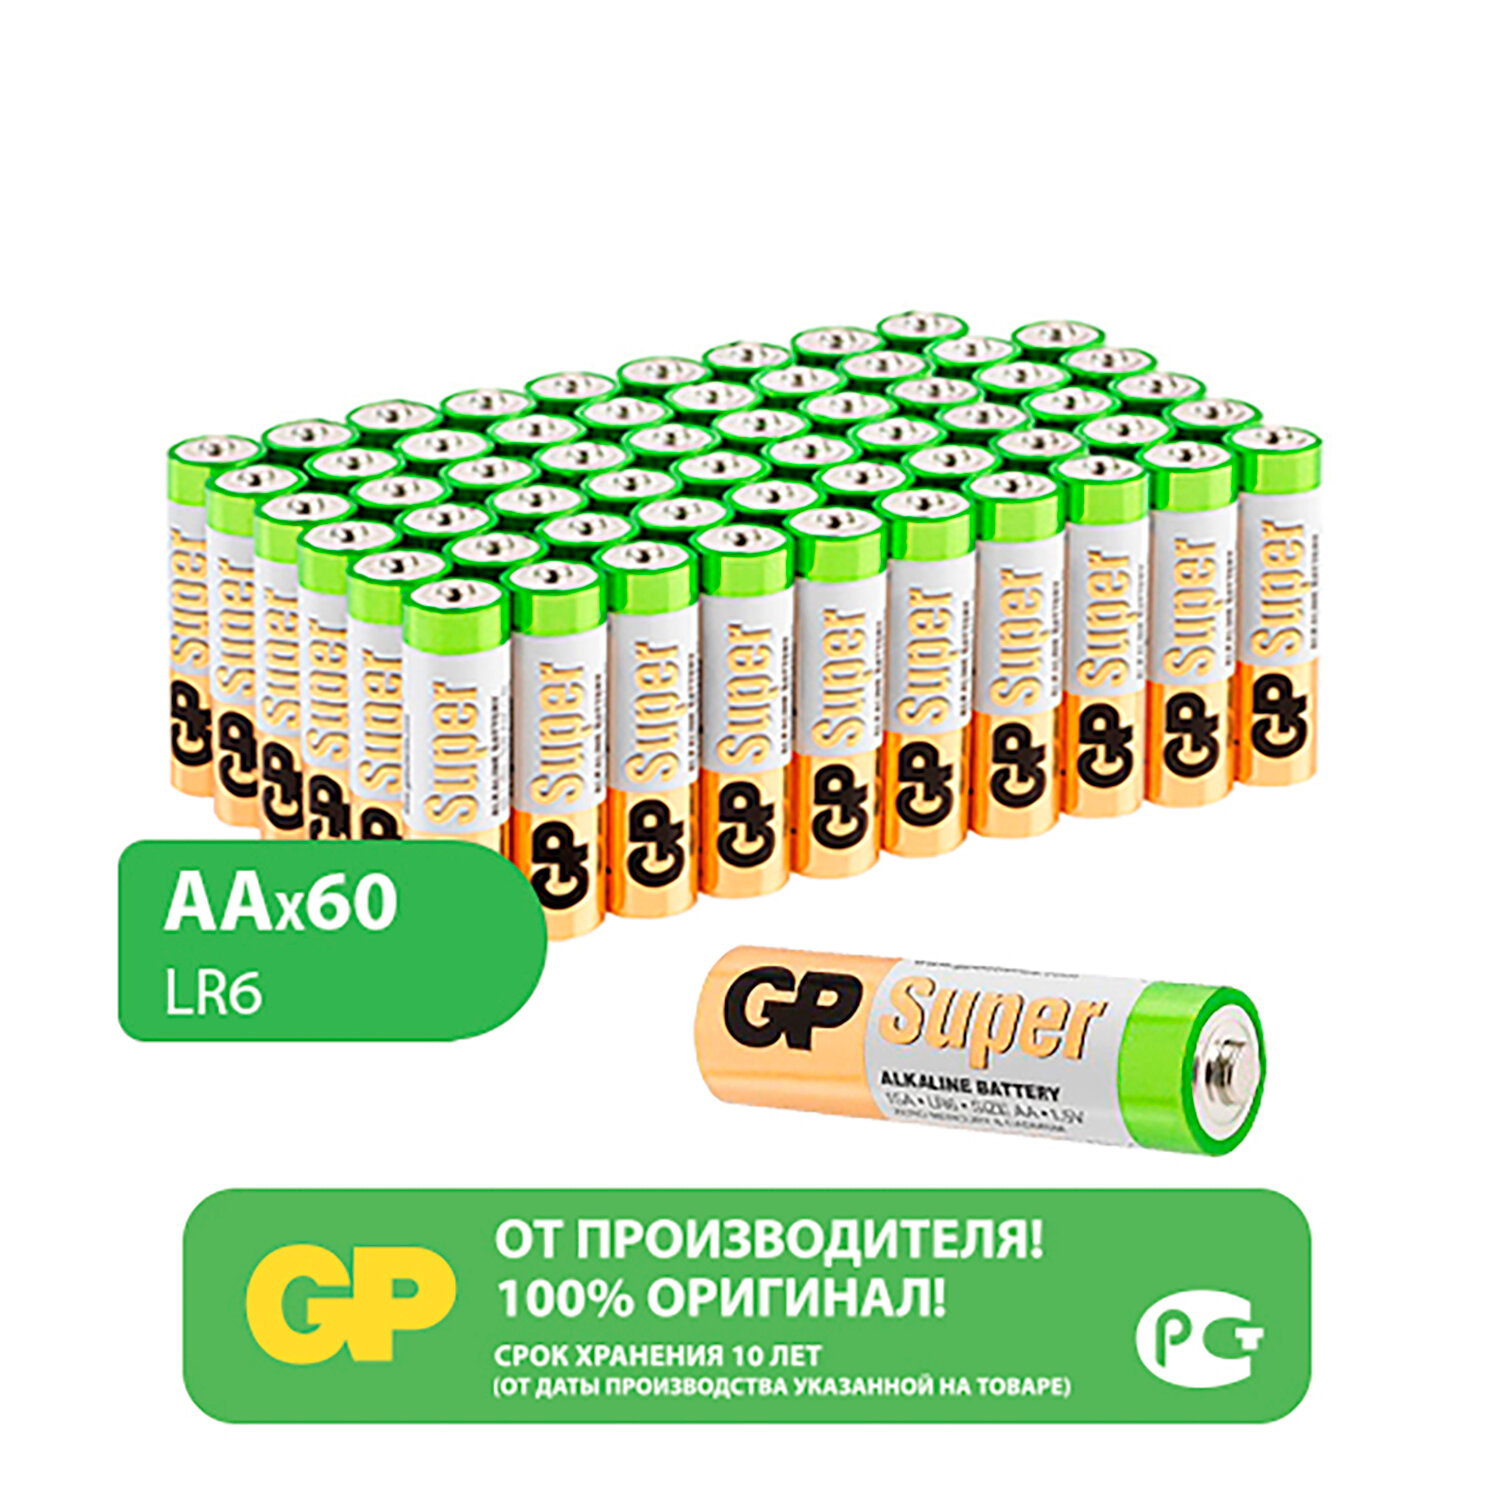 Батарейки АА пальчиковые алкалиновые GP Super 15А-2CRV, набор 60 шт